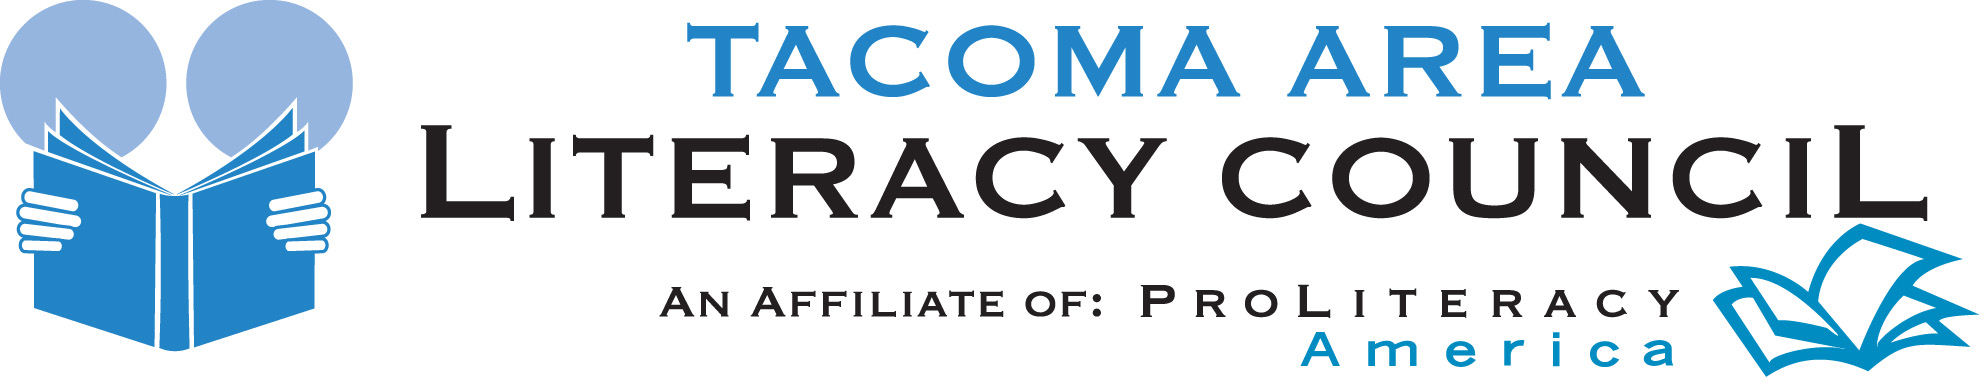 Tacoma Area Literacy Council logo